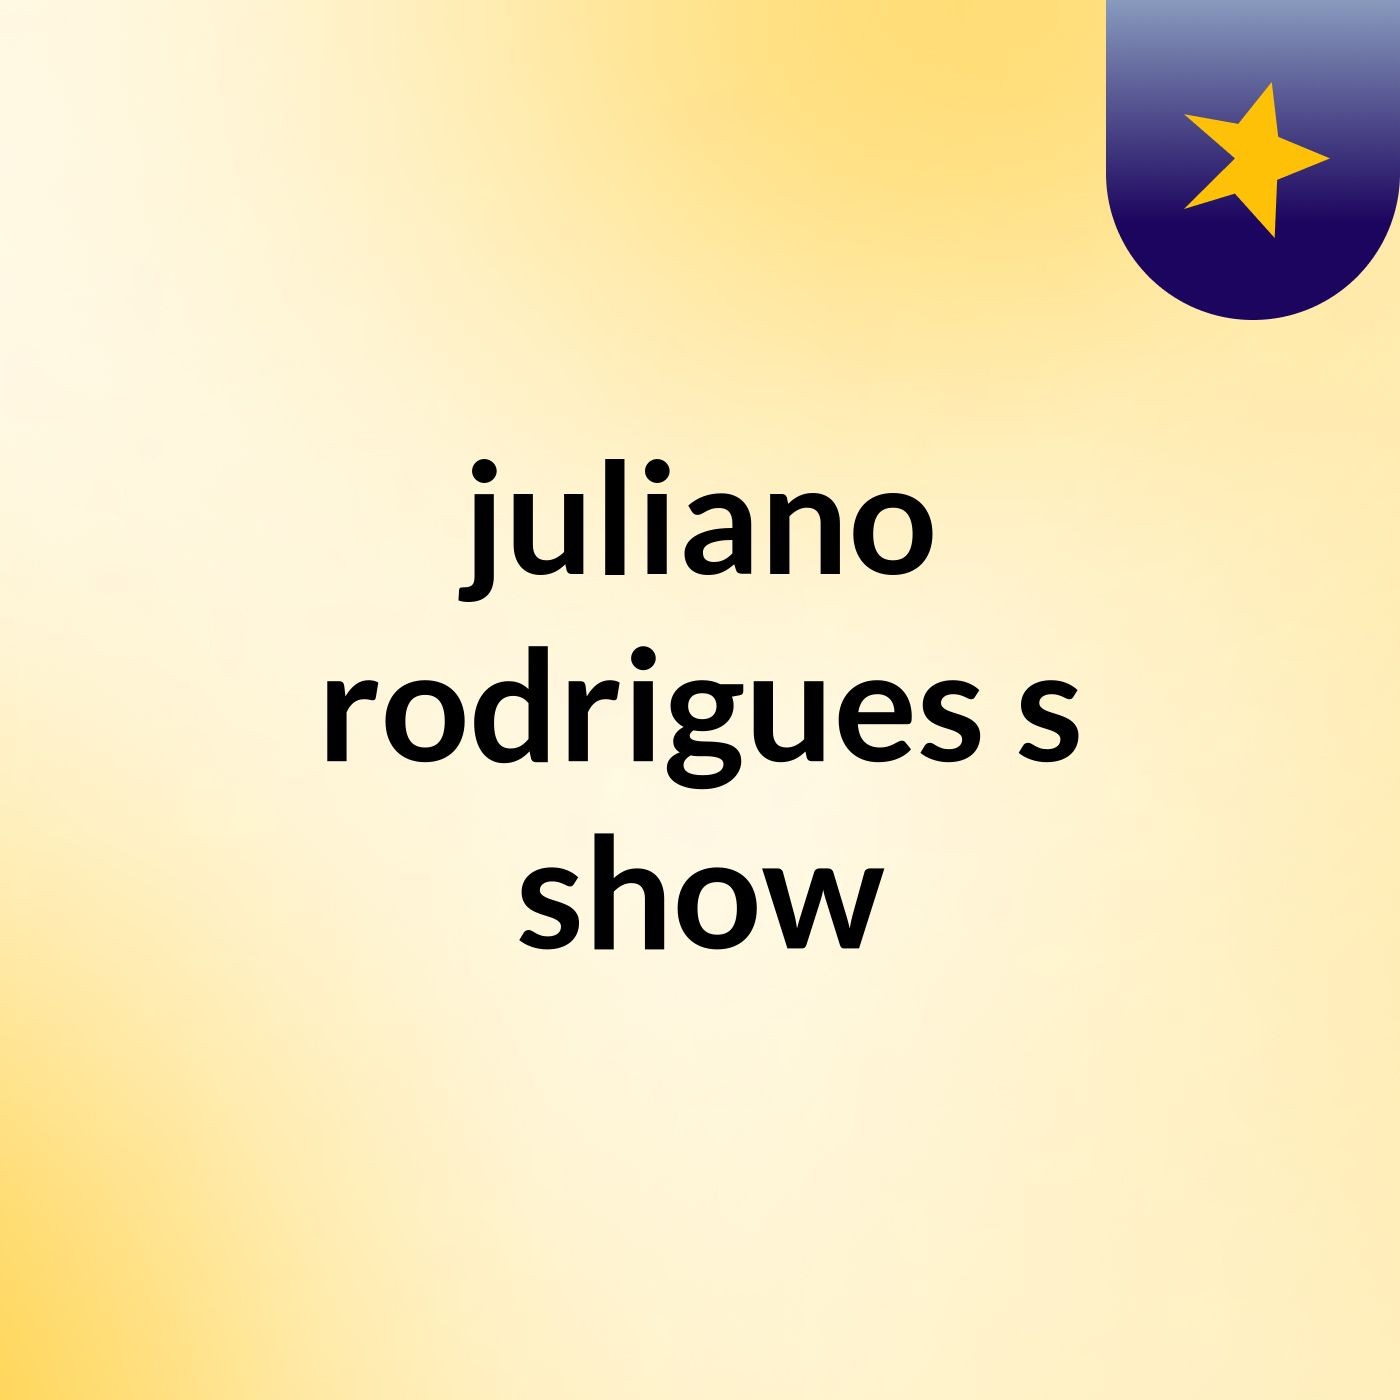 juliano rodrigues's show